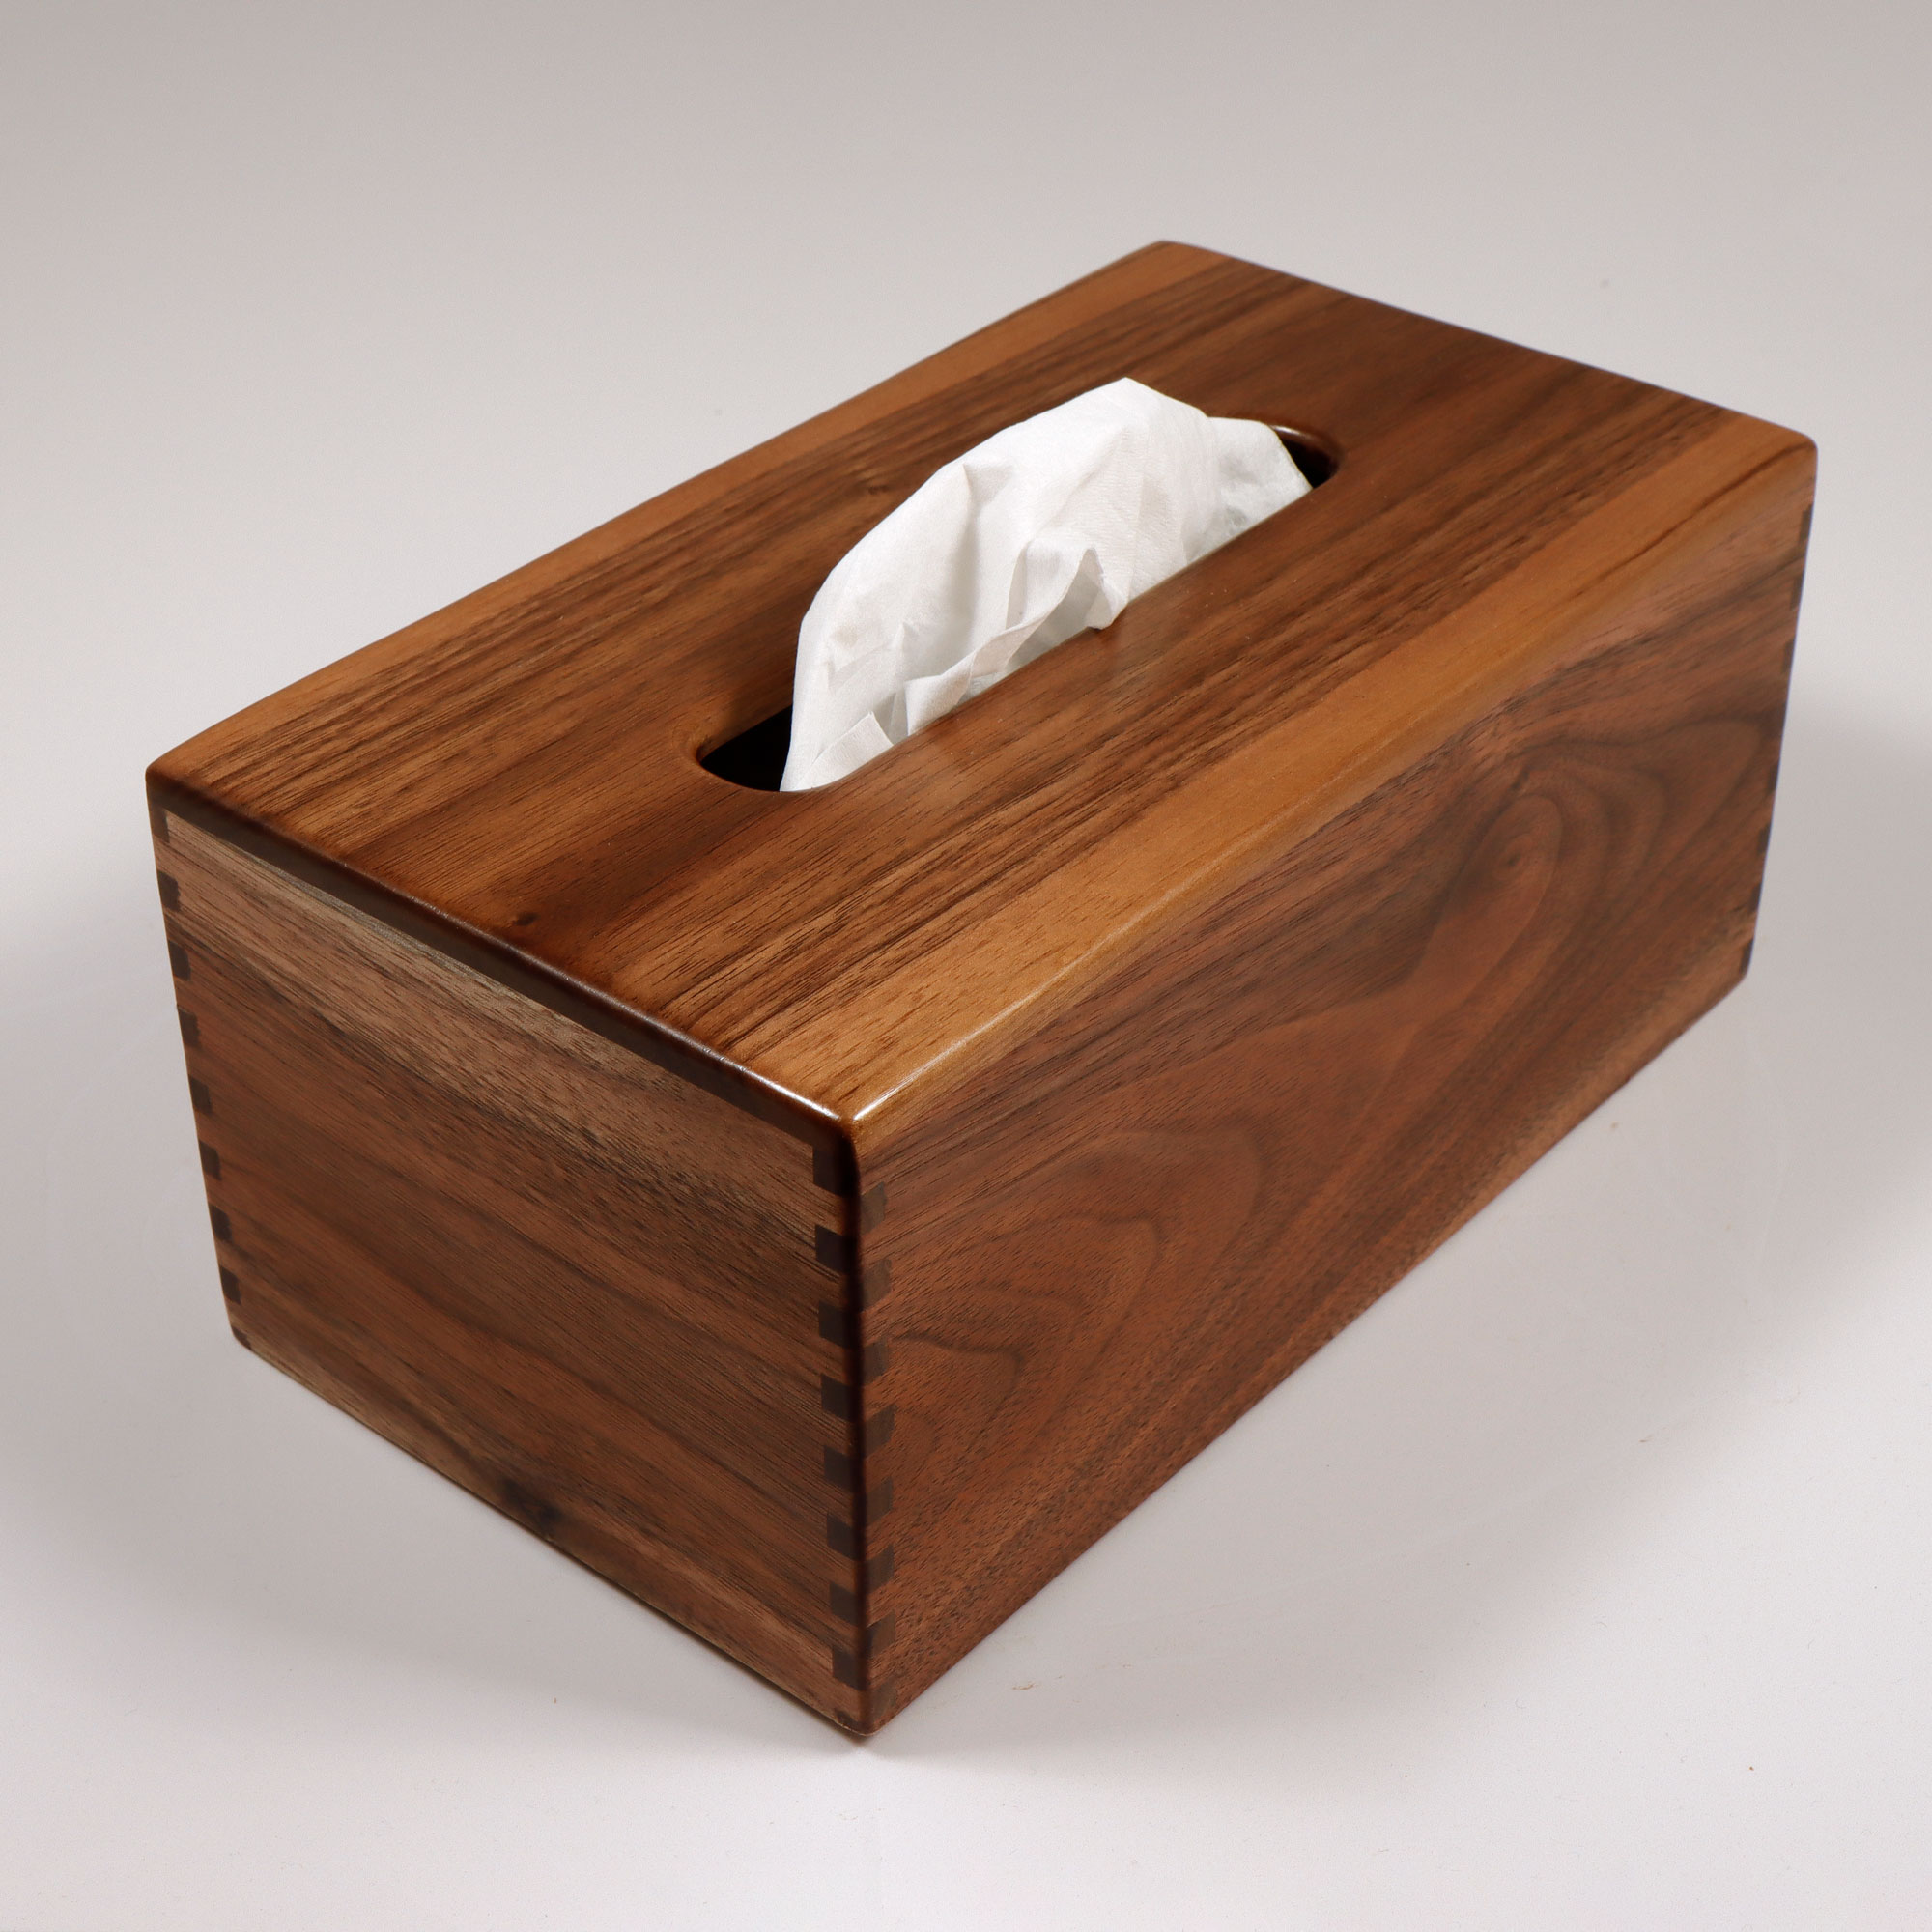 housesweet Rectangular Paper Facial Tissue Box Wooden Cover Holder for Bedroom Dressers Desk Table